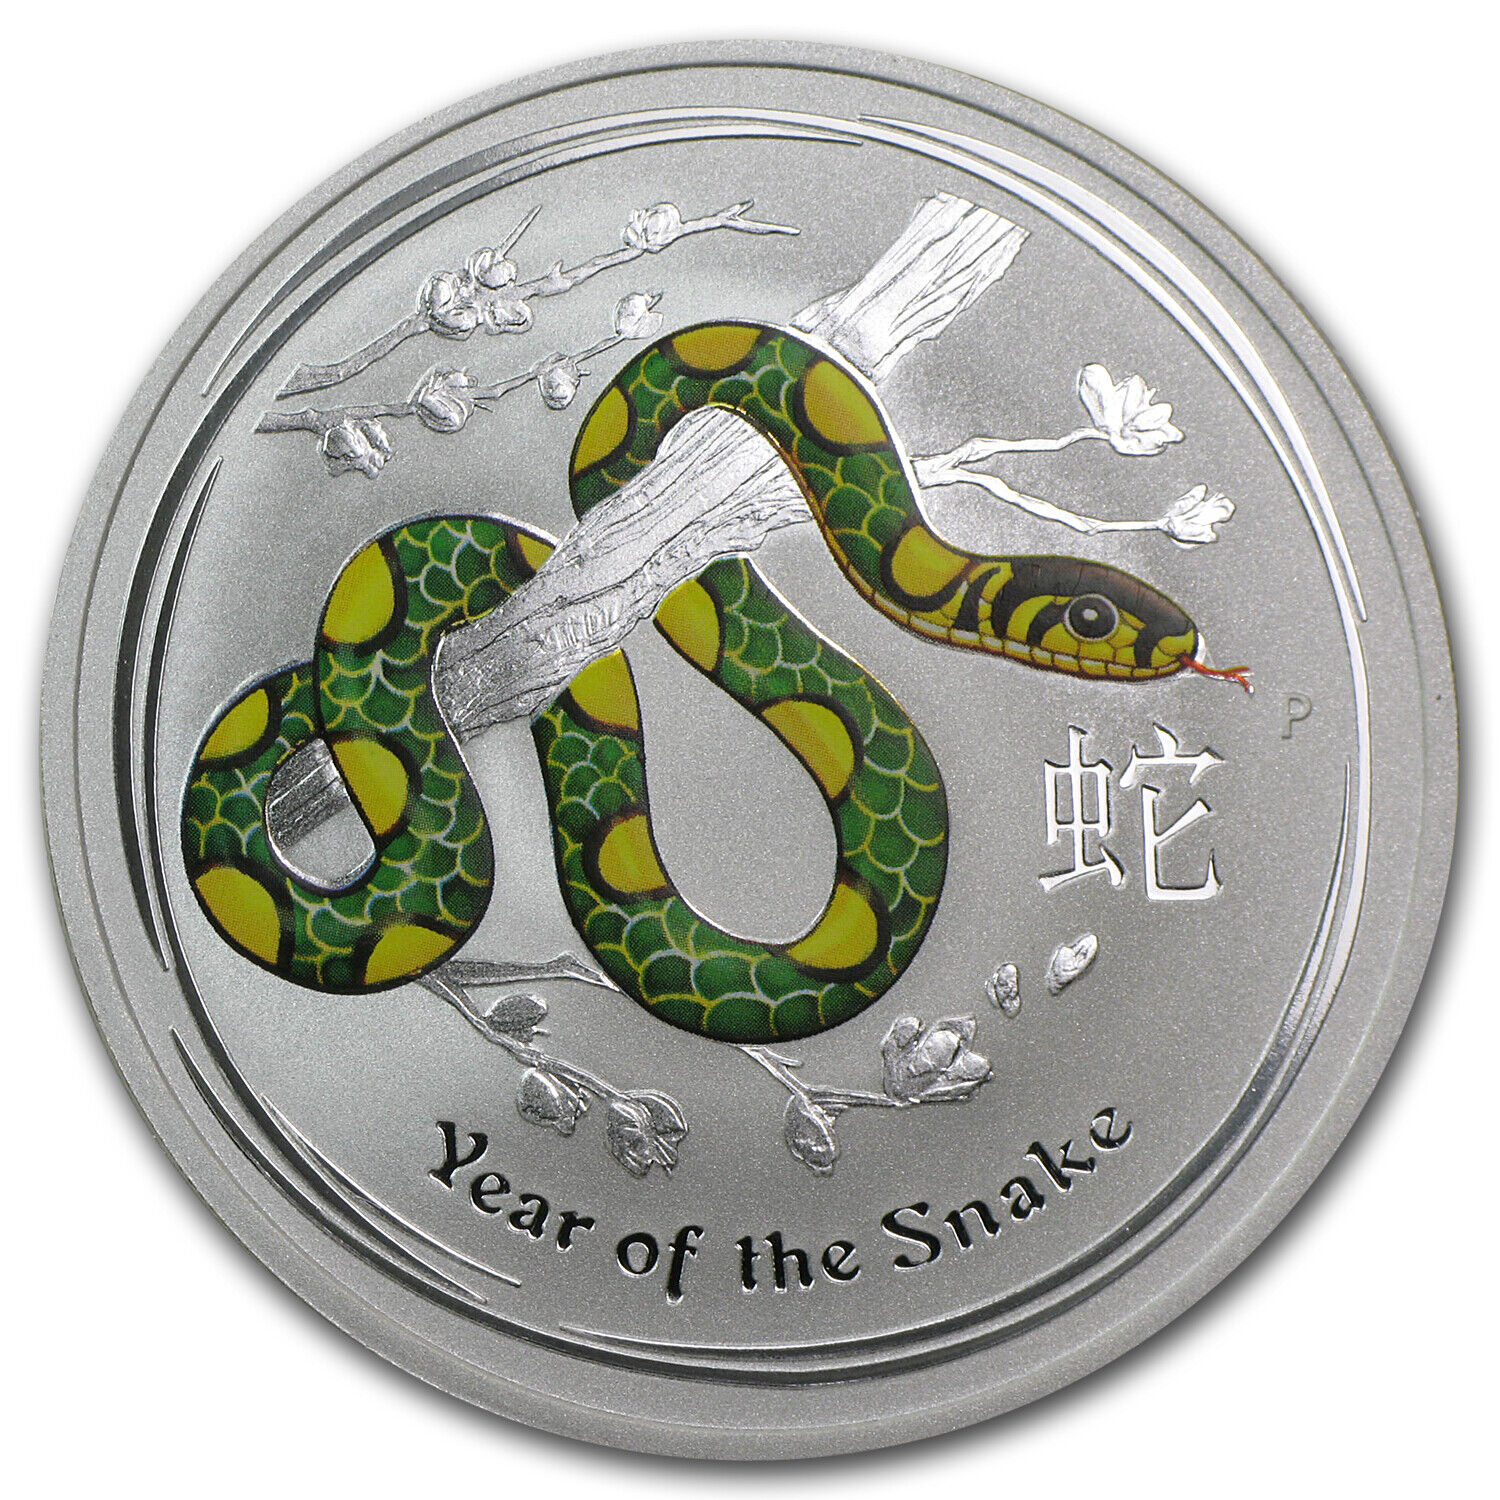 2013 Australia 1 oz Silver Year of the Snake BU (Colorized)